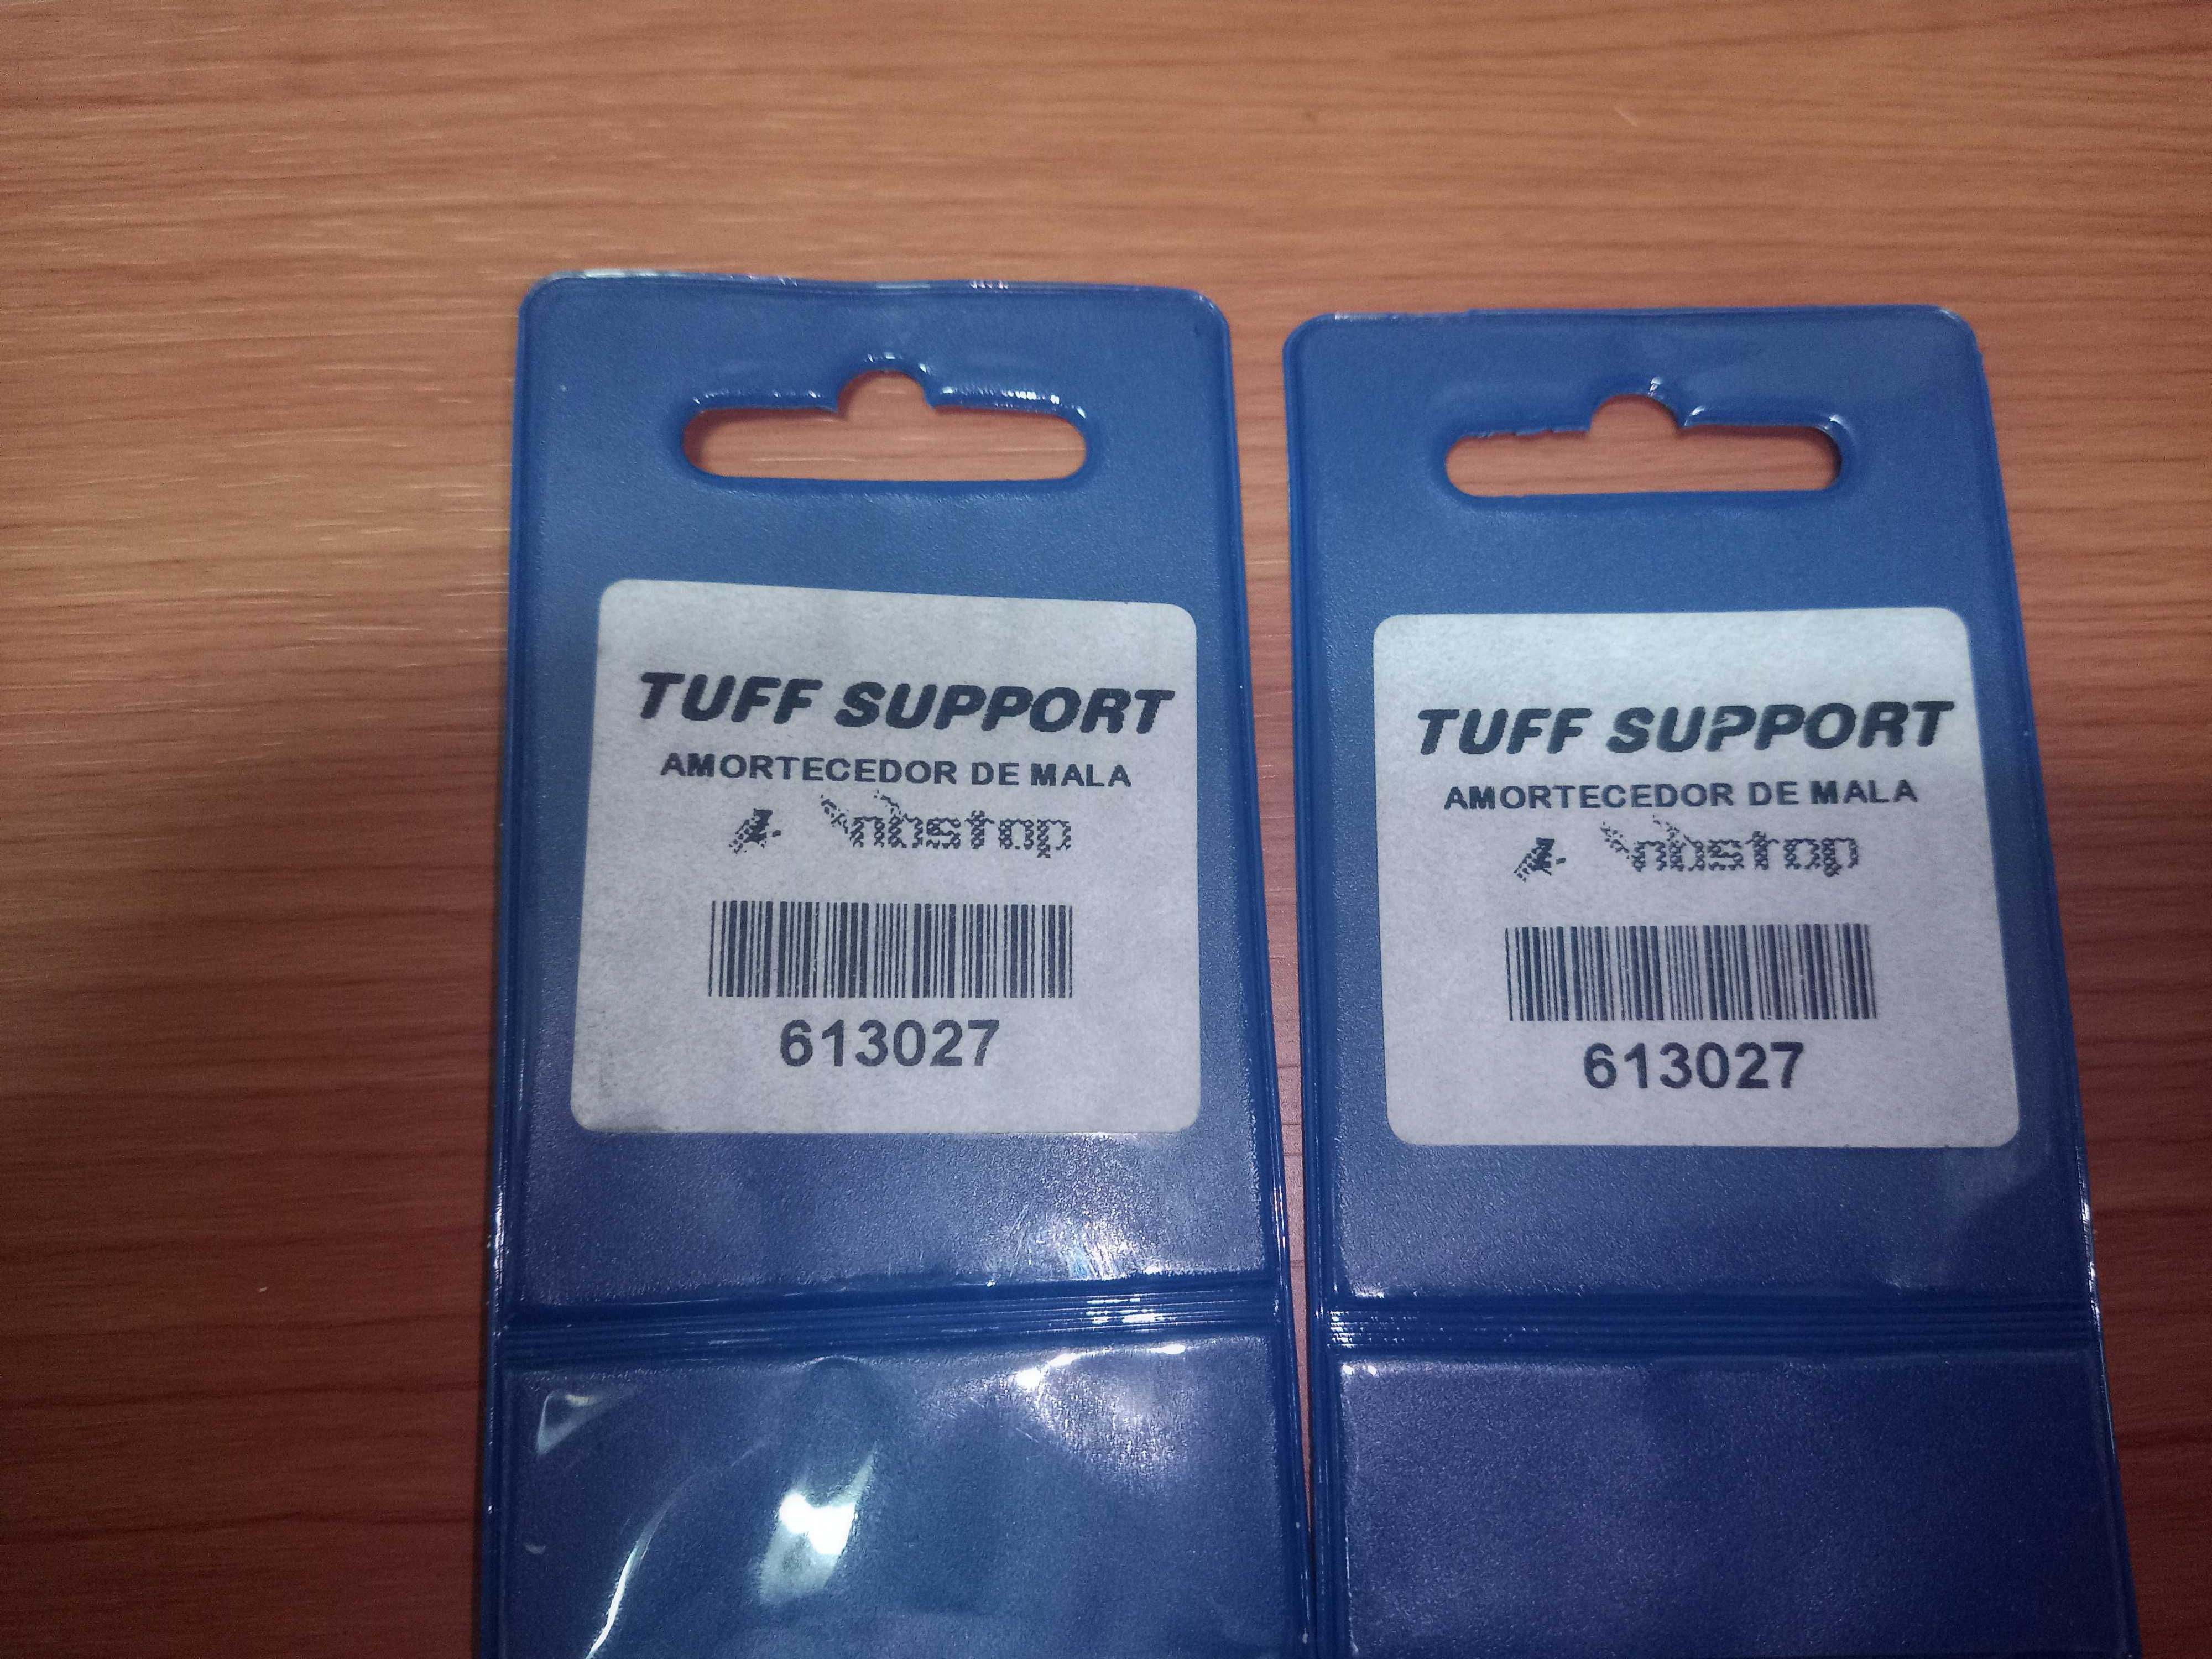 Dois amortecedores da mala "Tuff Support"